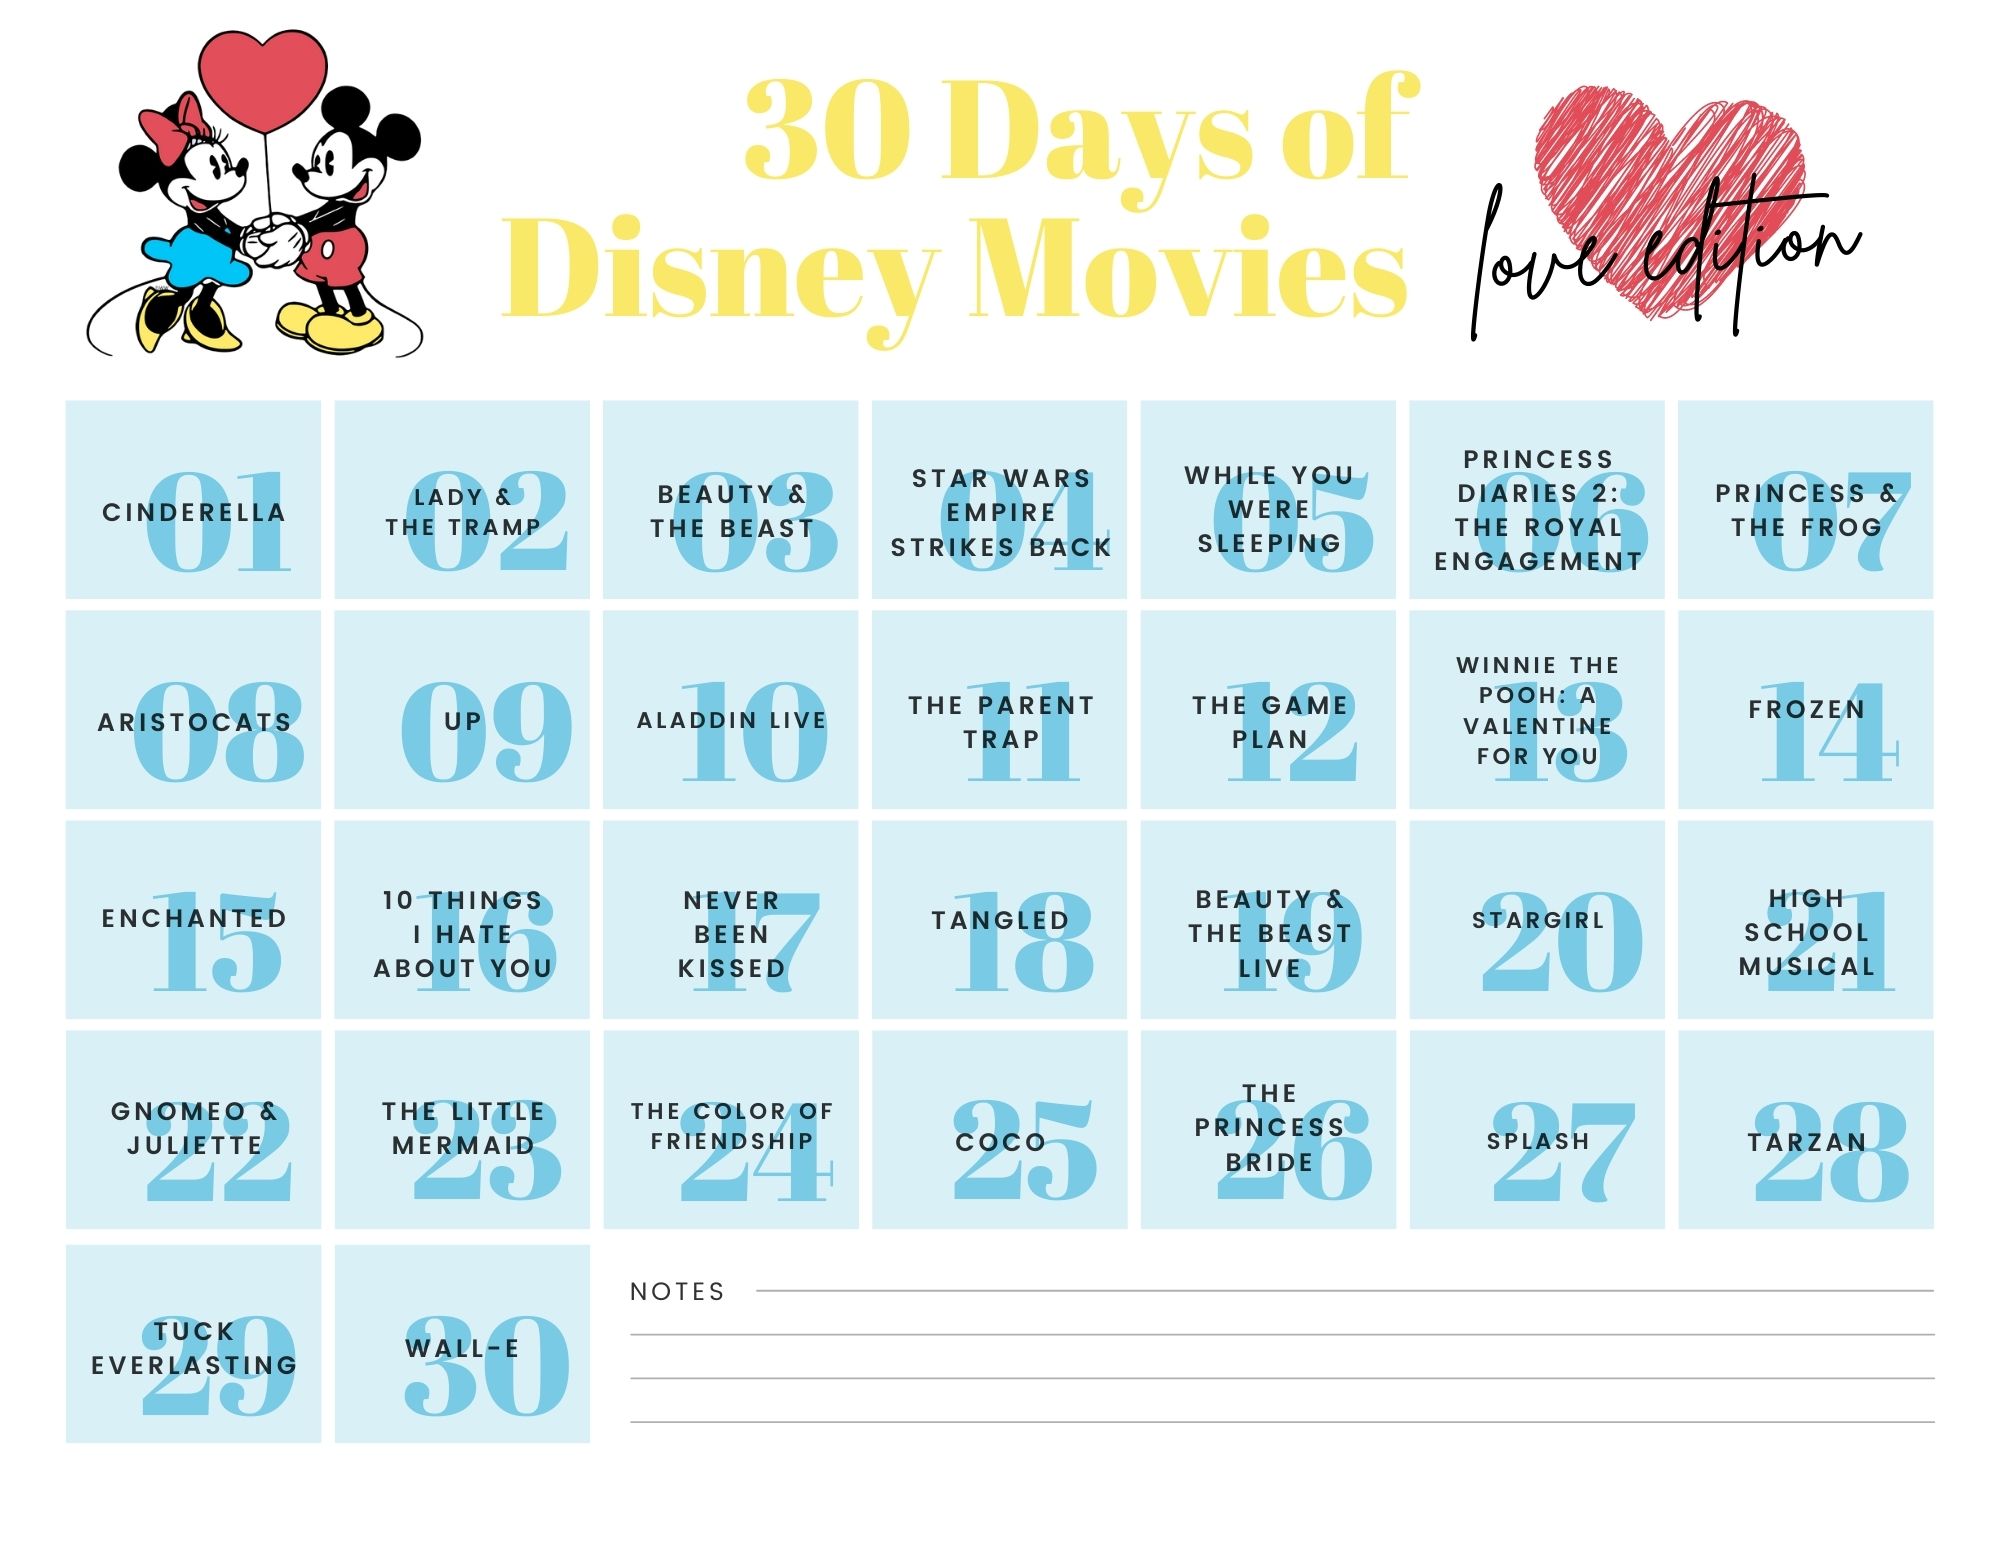 30 days of Disney Movies- Love edition!